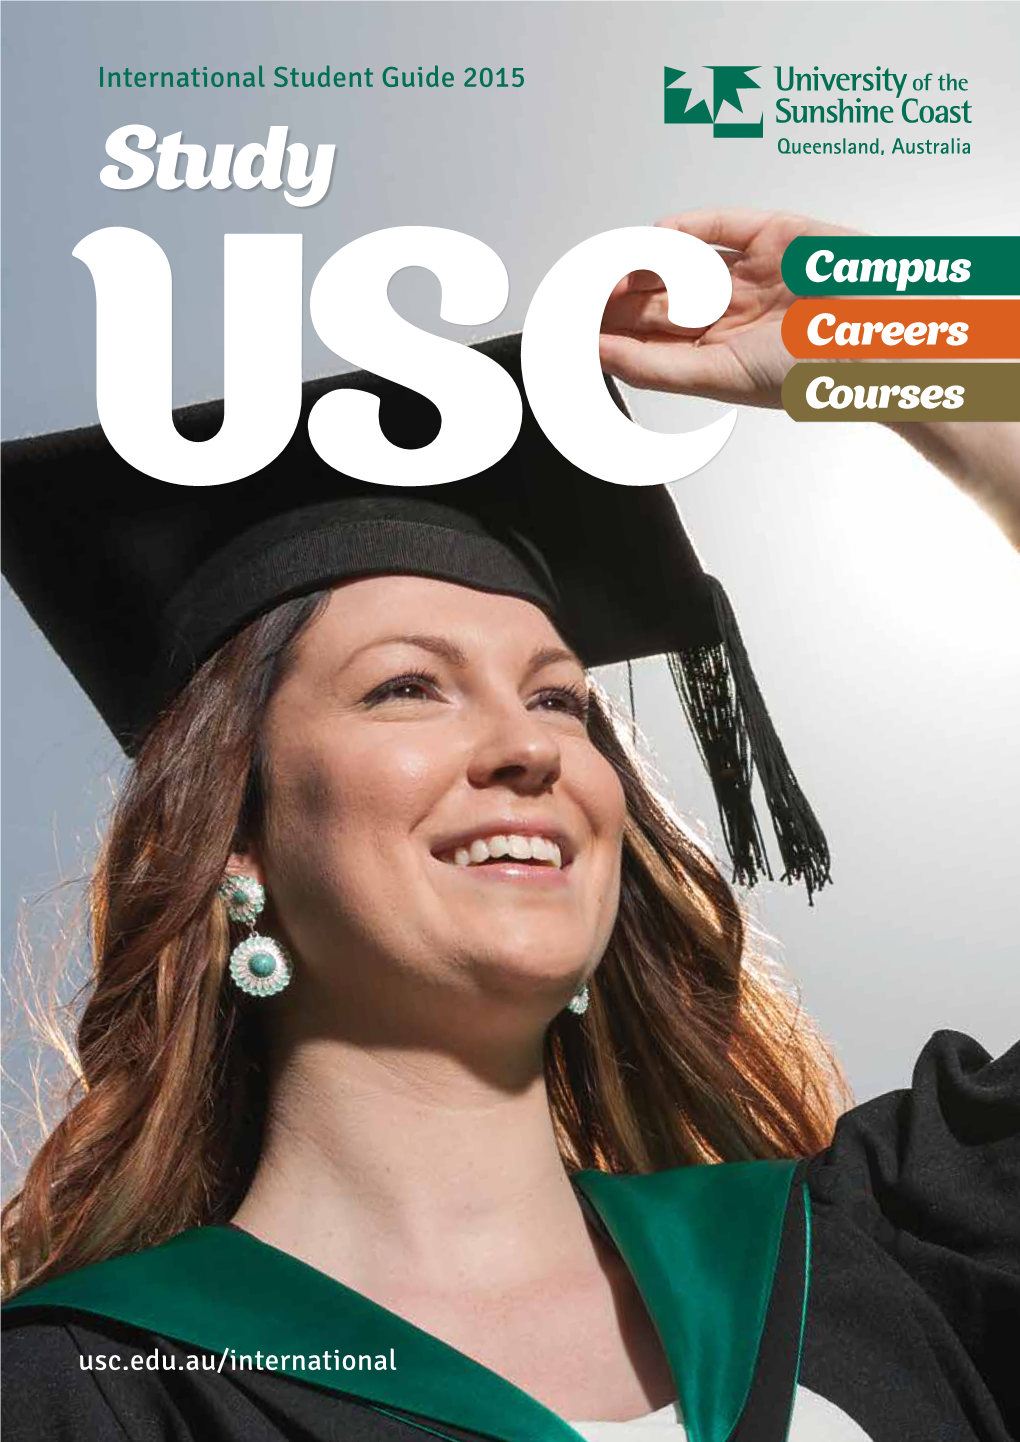 USC Campus Careers Courses